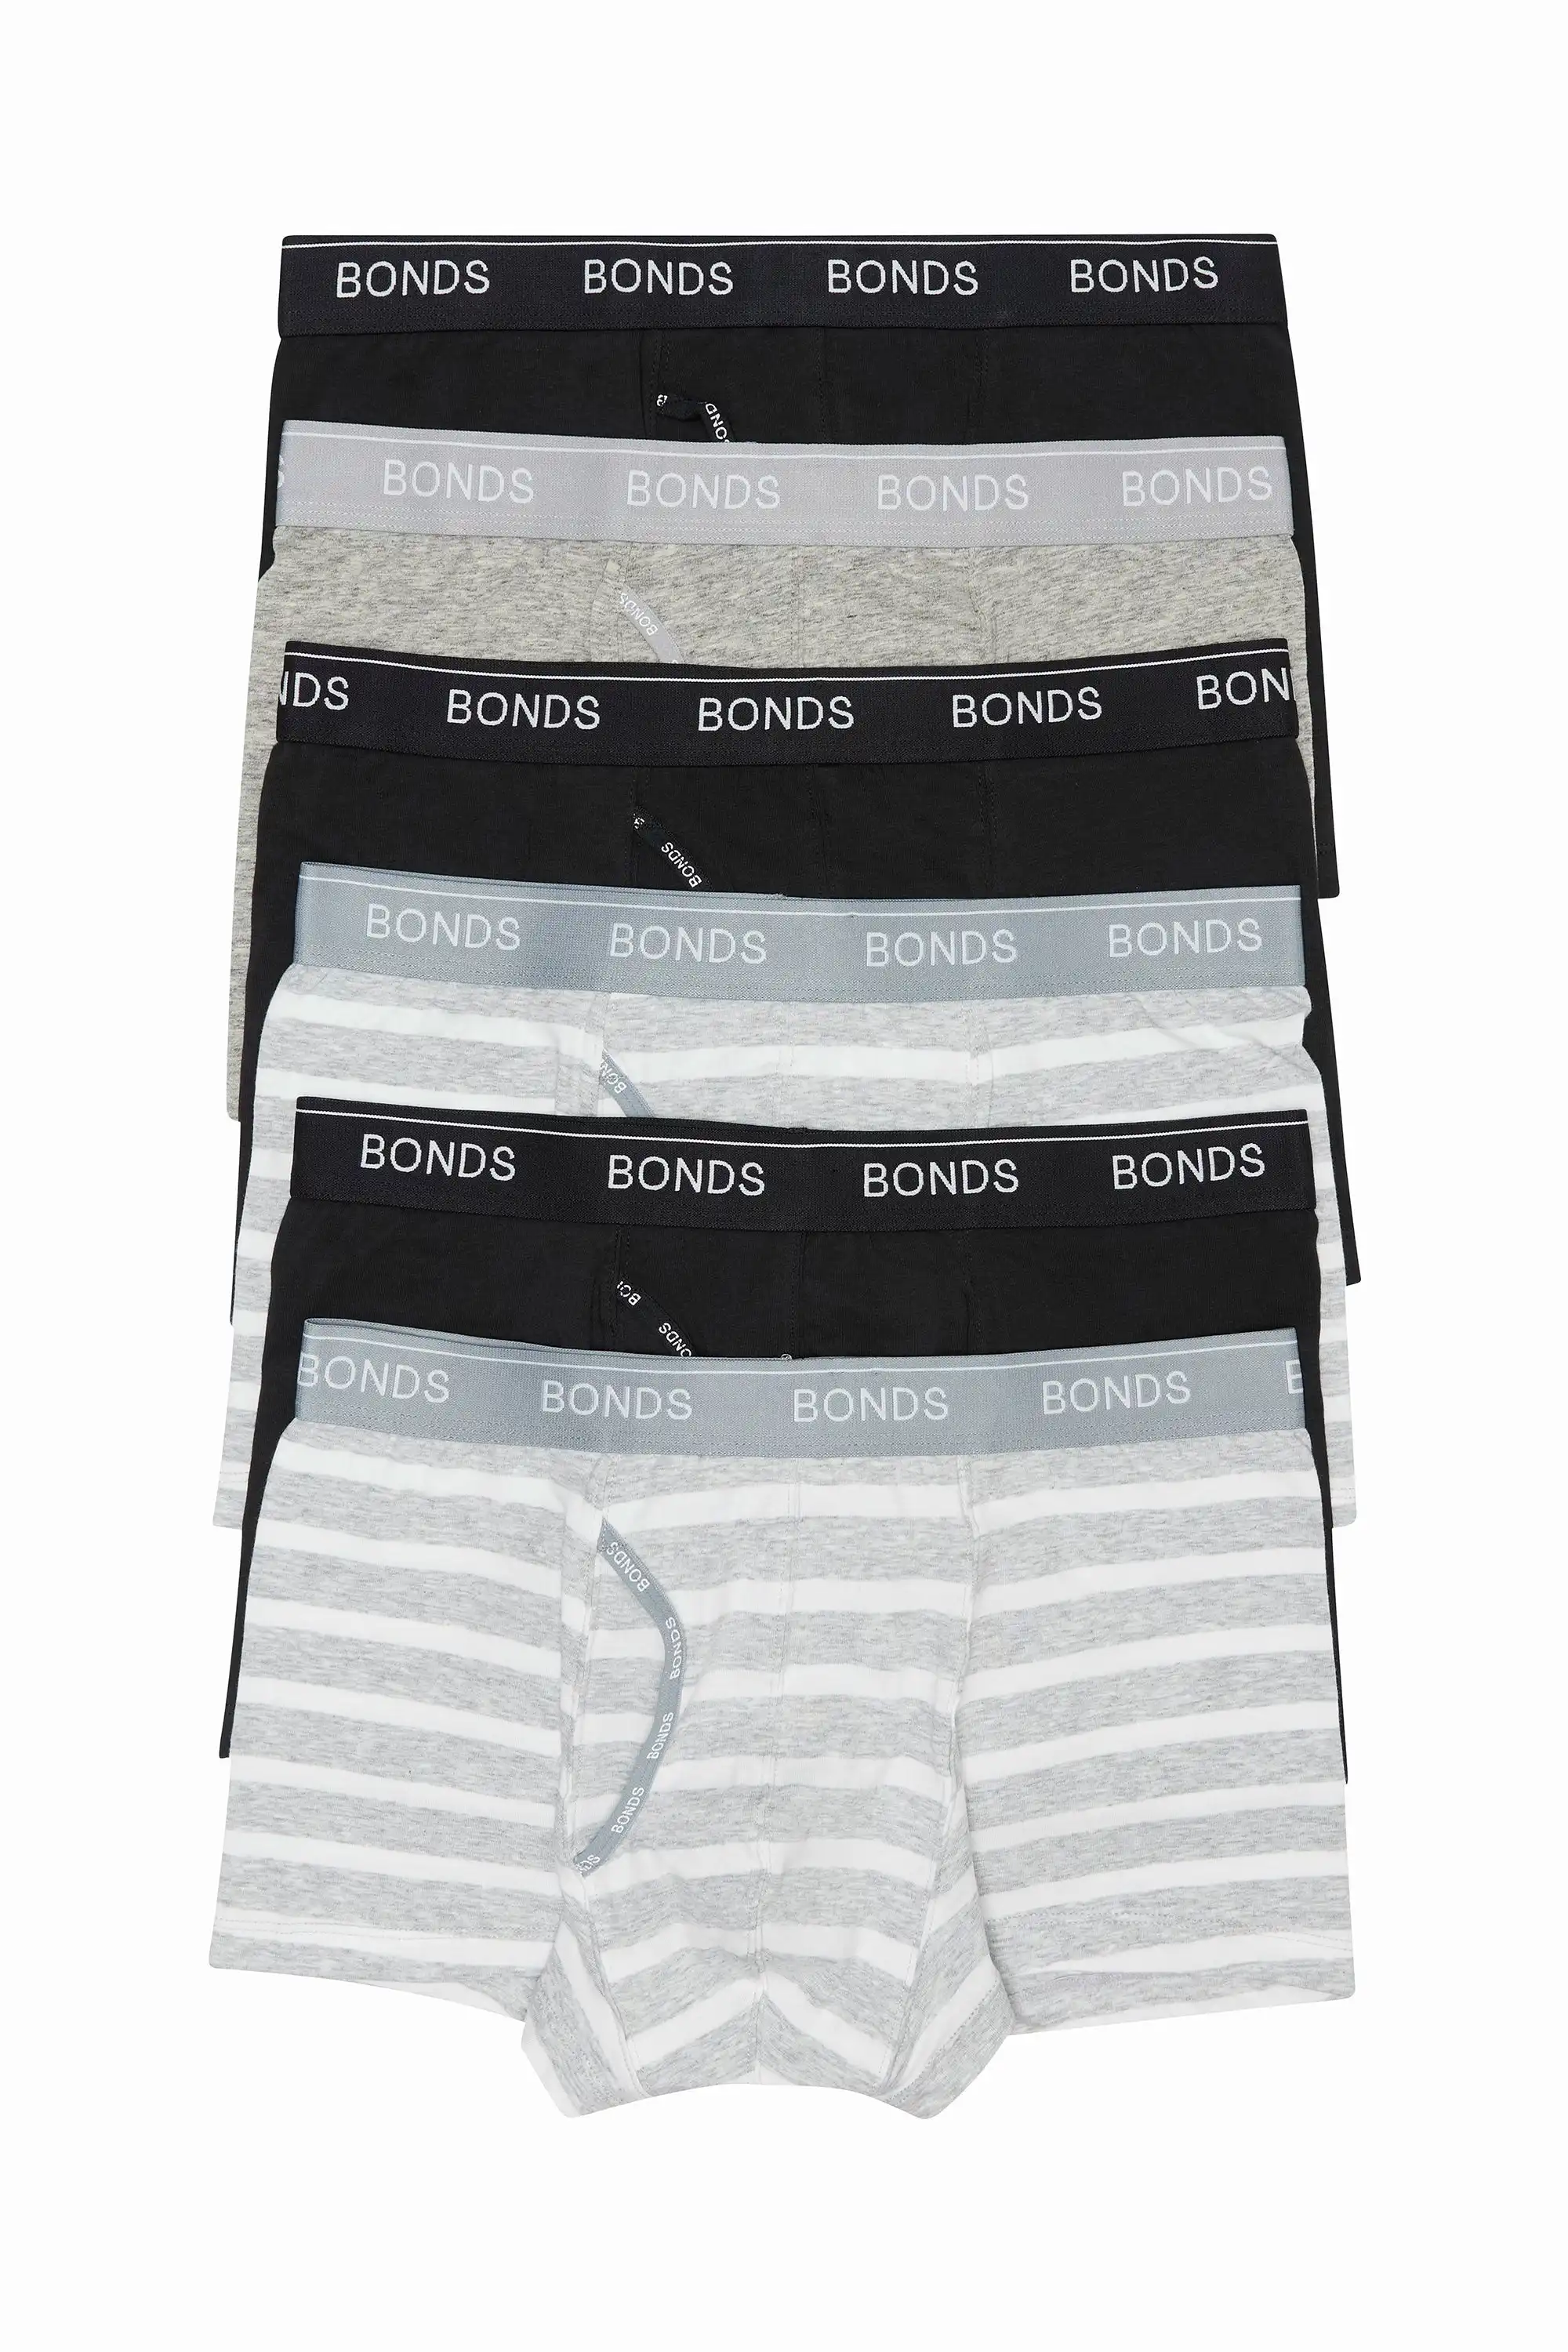 6 x Bonds Mens Guyfront Trunks Underwear Black/Grey/Grey Stripe